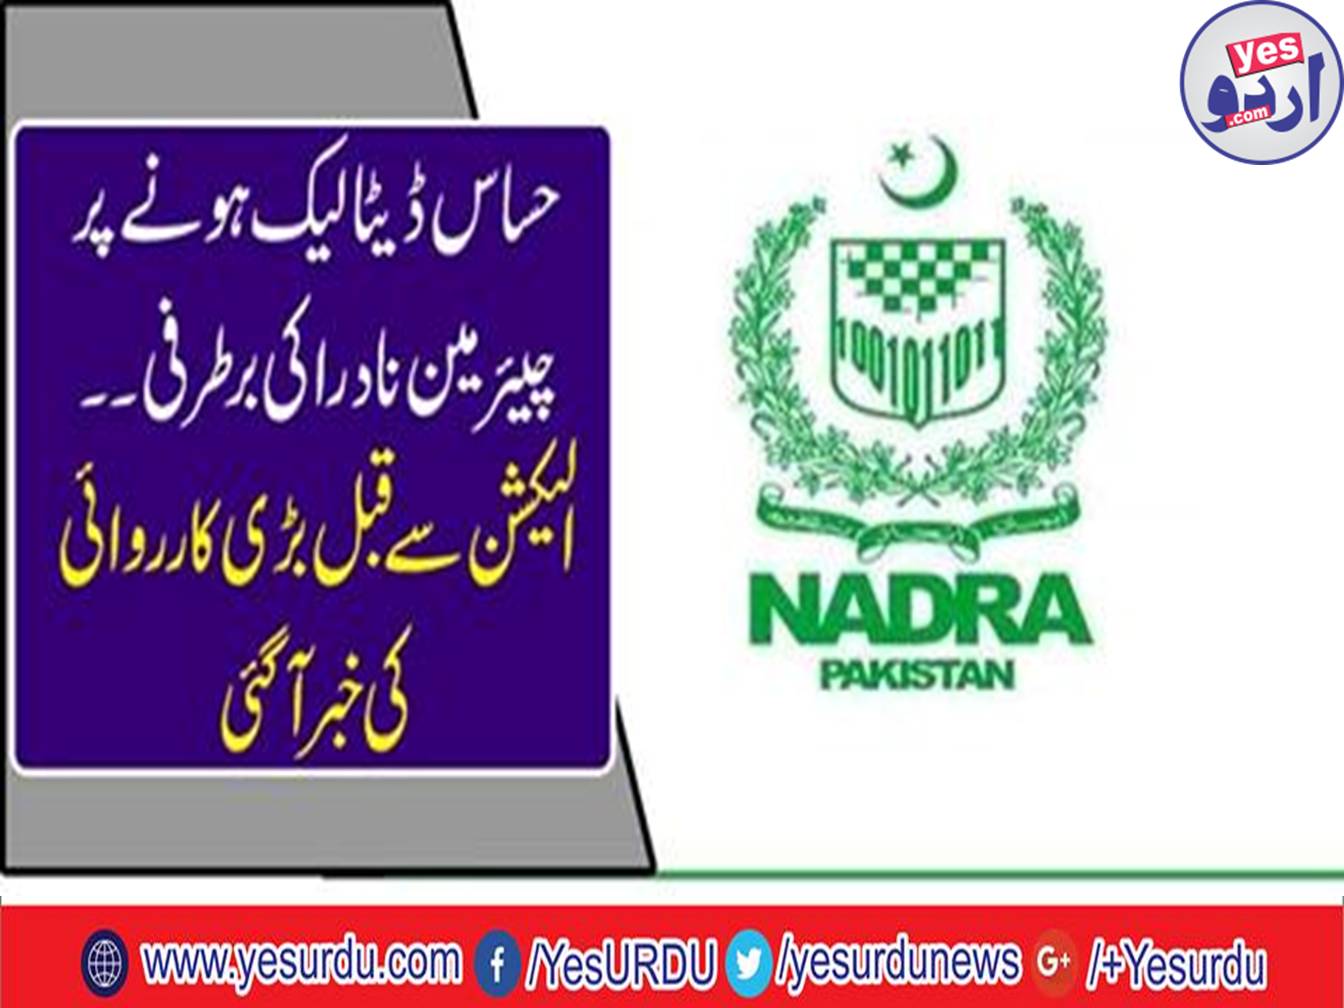 Chairman Nadra dismissed on sensitive data leaked